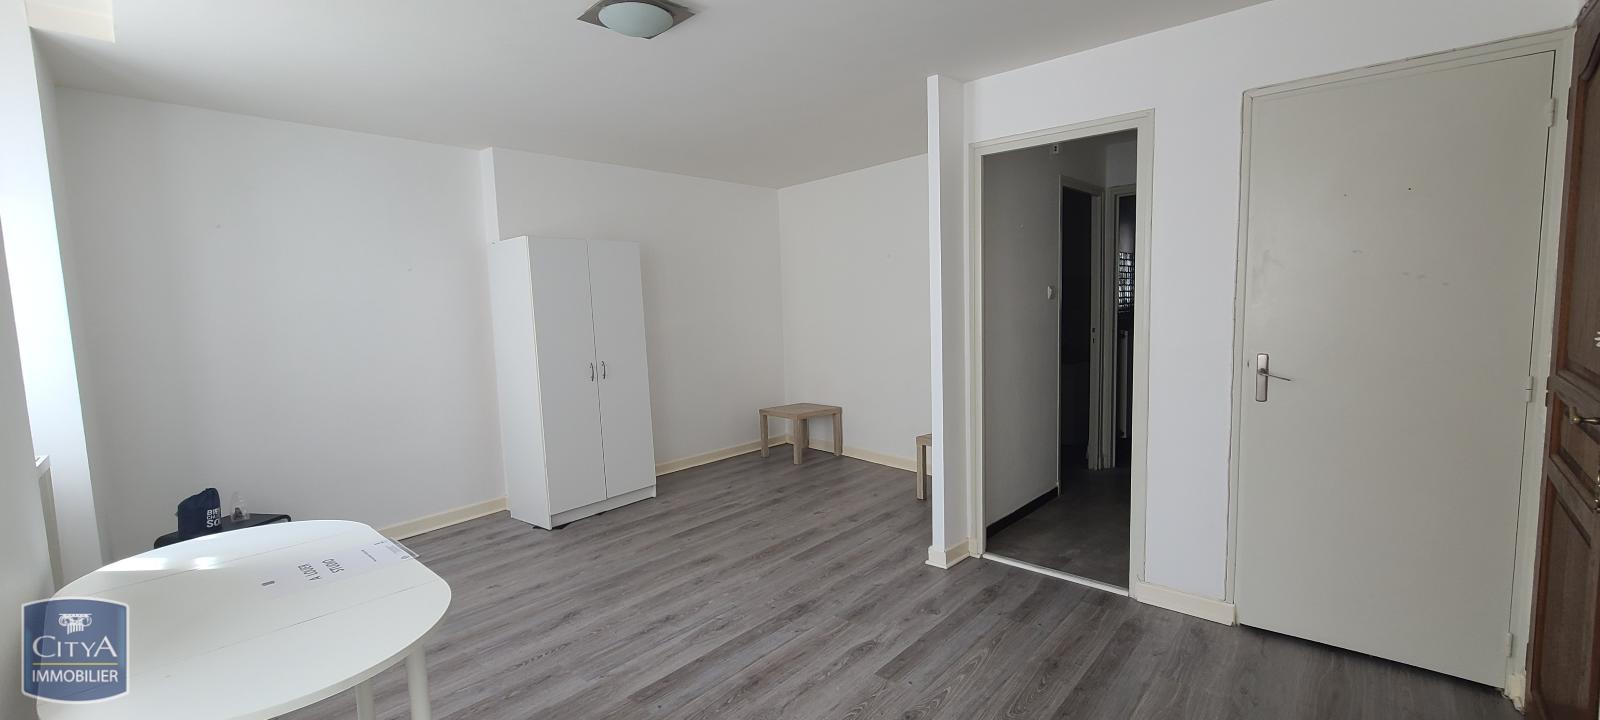 Appartement 1 pièce - 31m² - BRIVE LA GAILLARDE